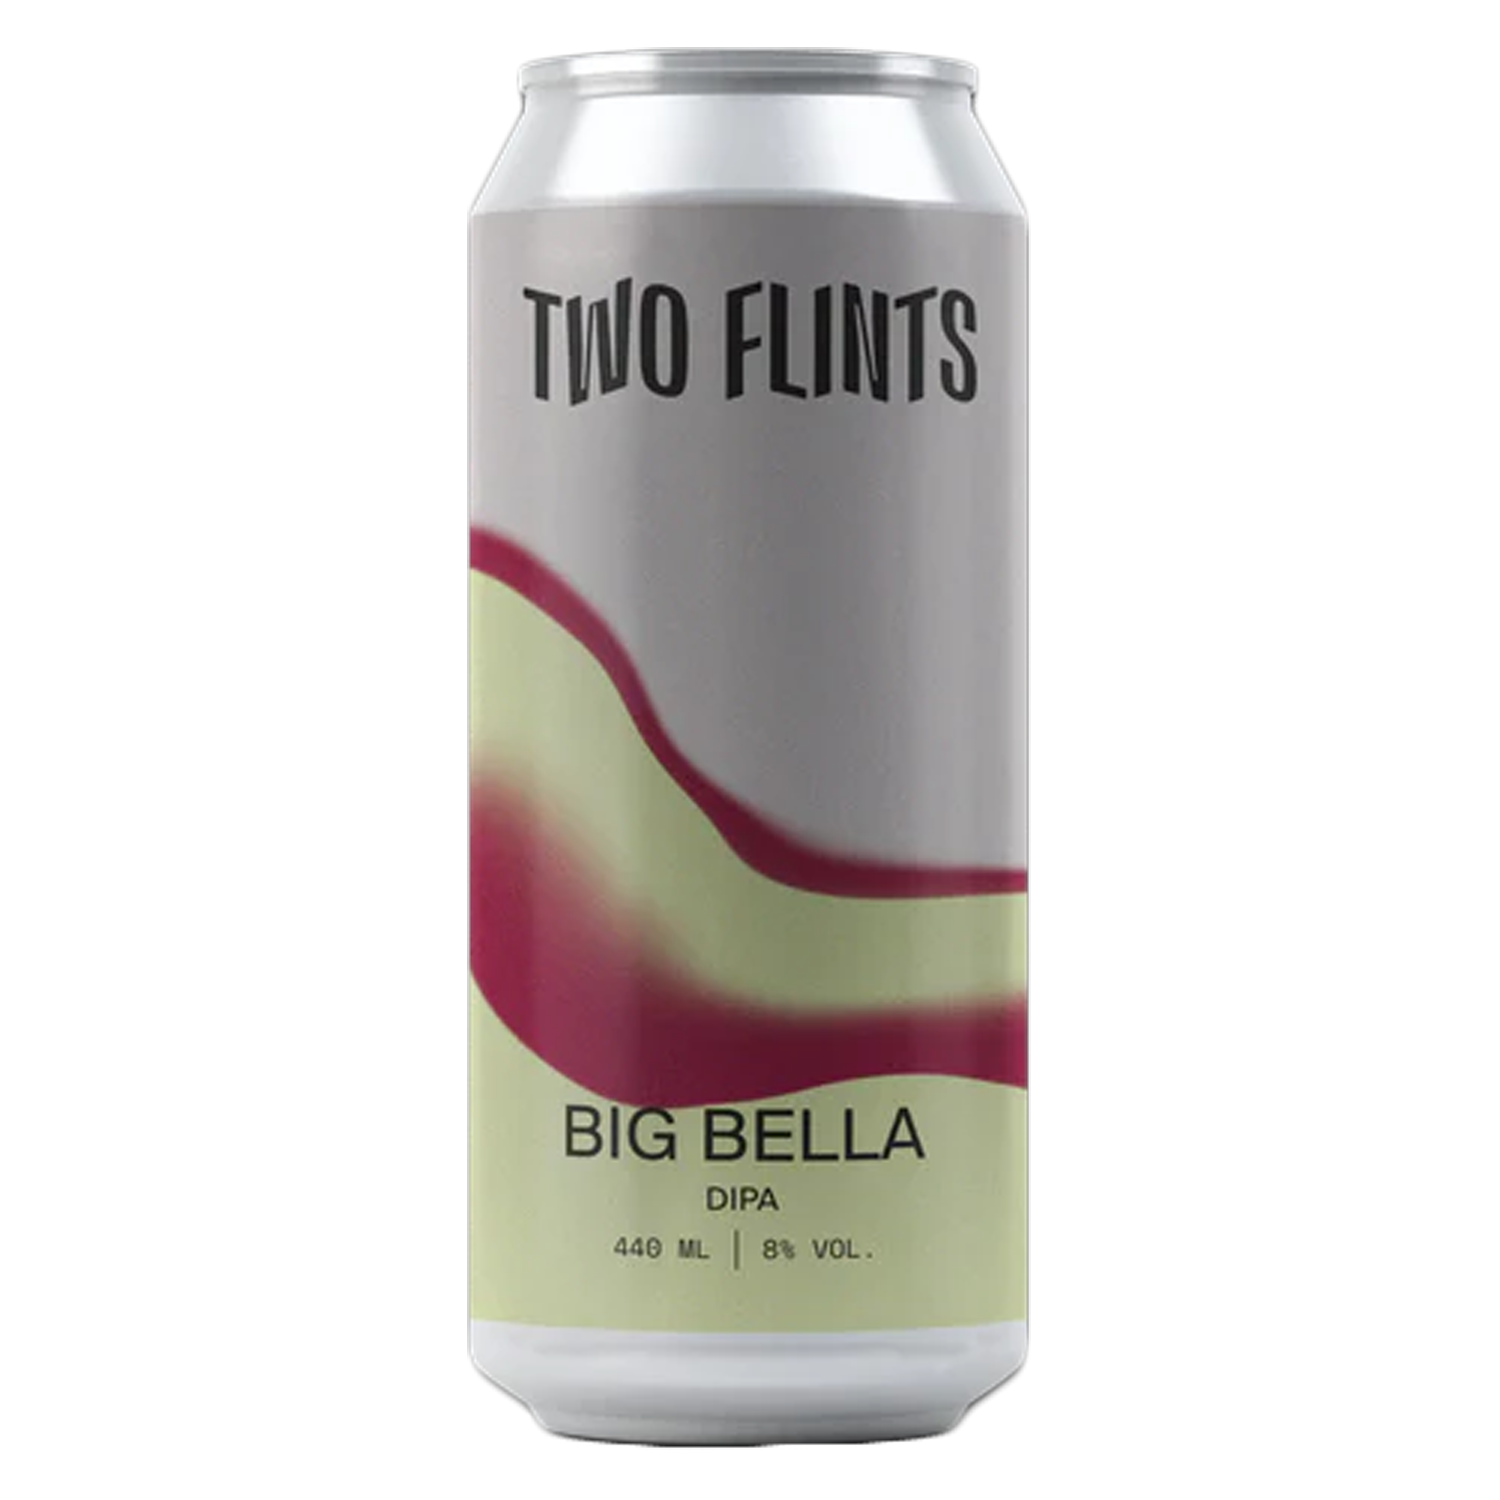 Two Flints Big Bella DIPA